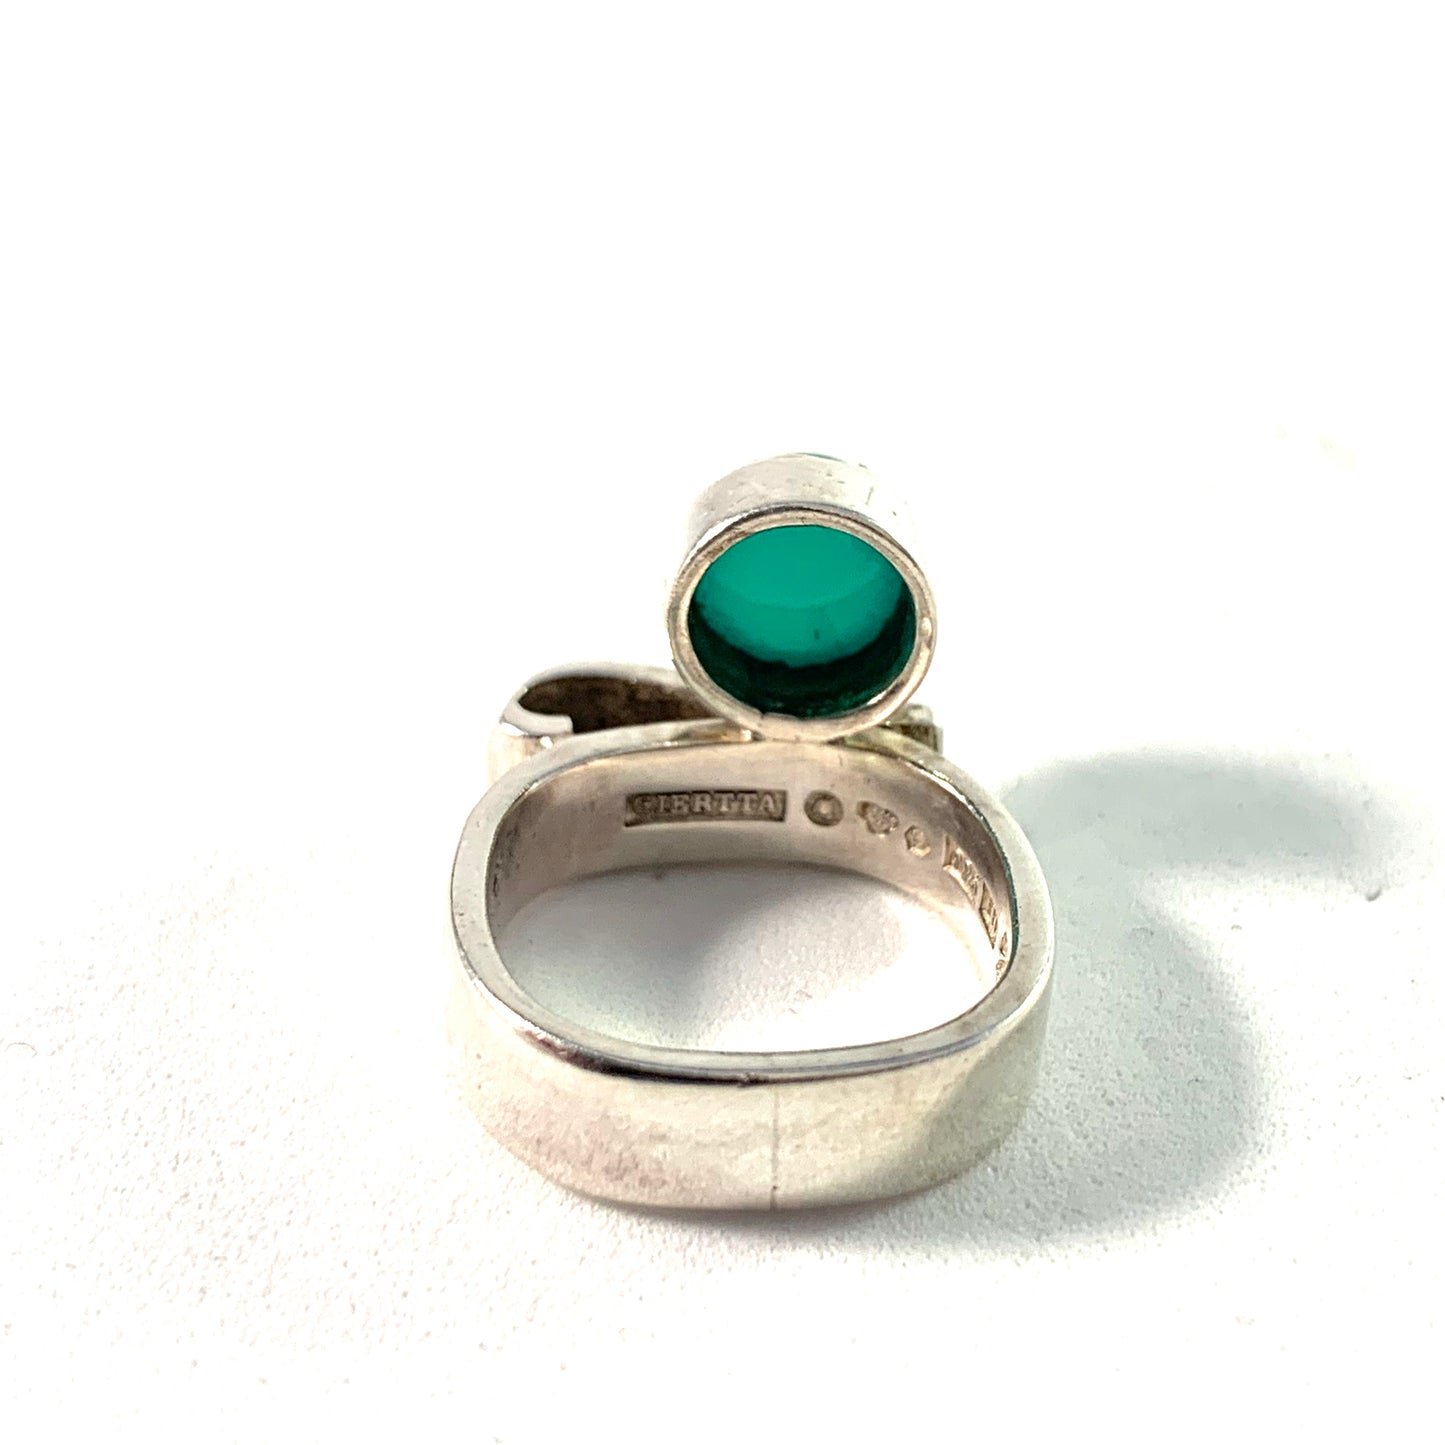 Claes E Giertta, Sweden Vintage Sterling Chrysoprase Ring. Signed